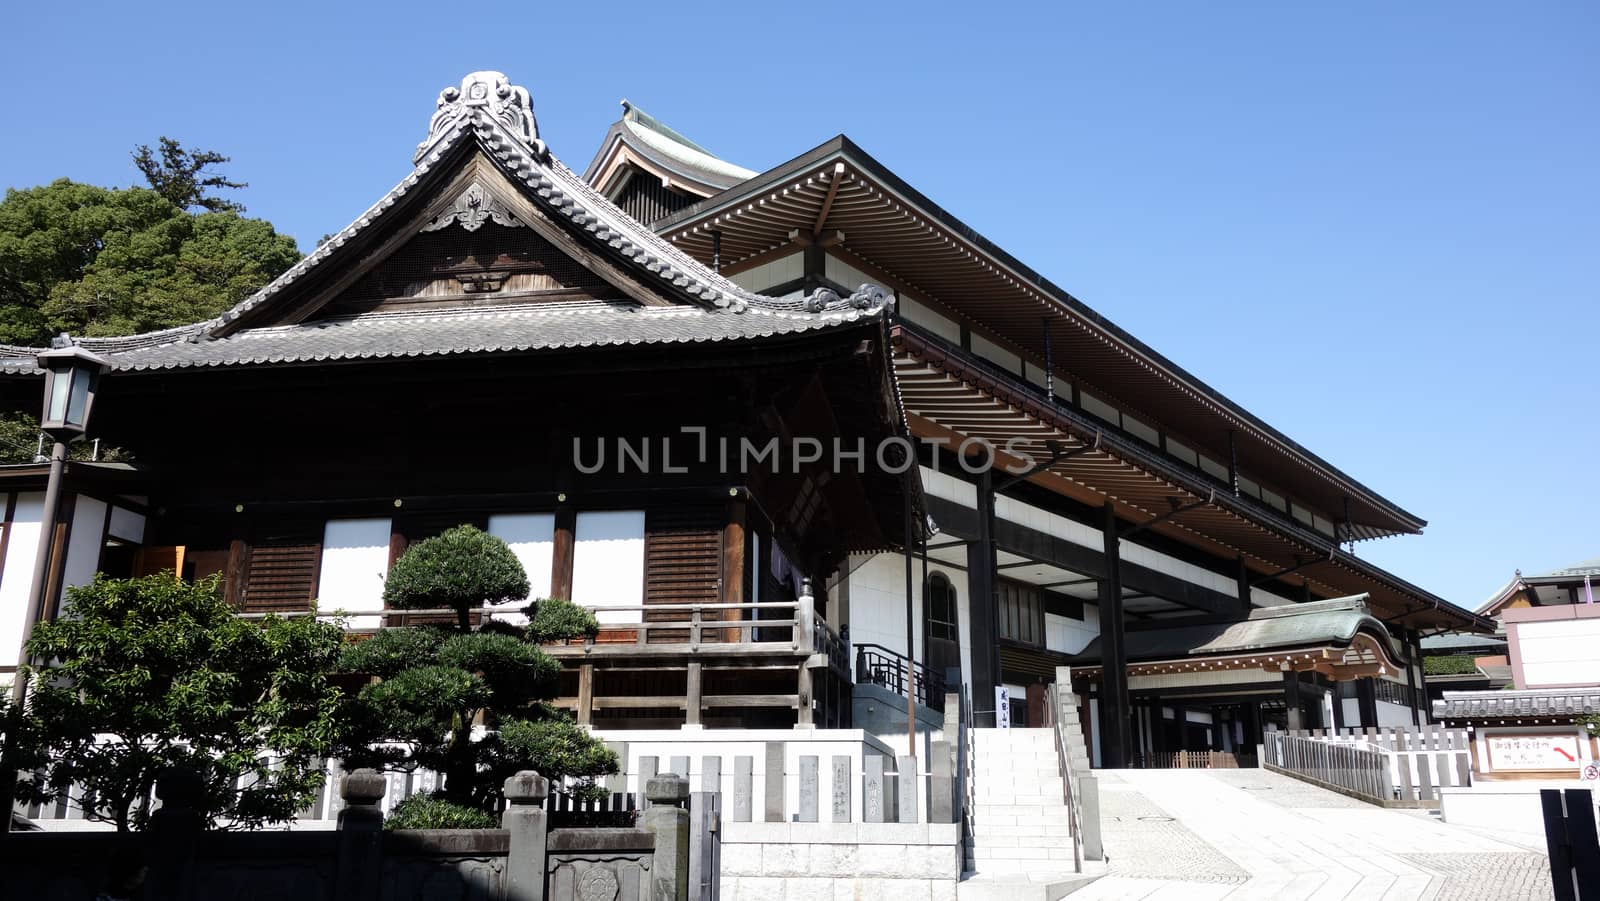 Narita-san Temple in Tokyo, Japan by Kingsman911